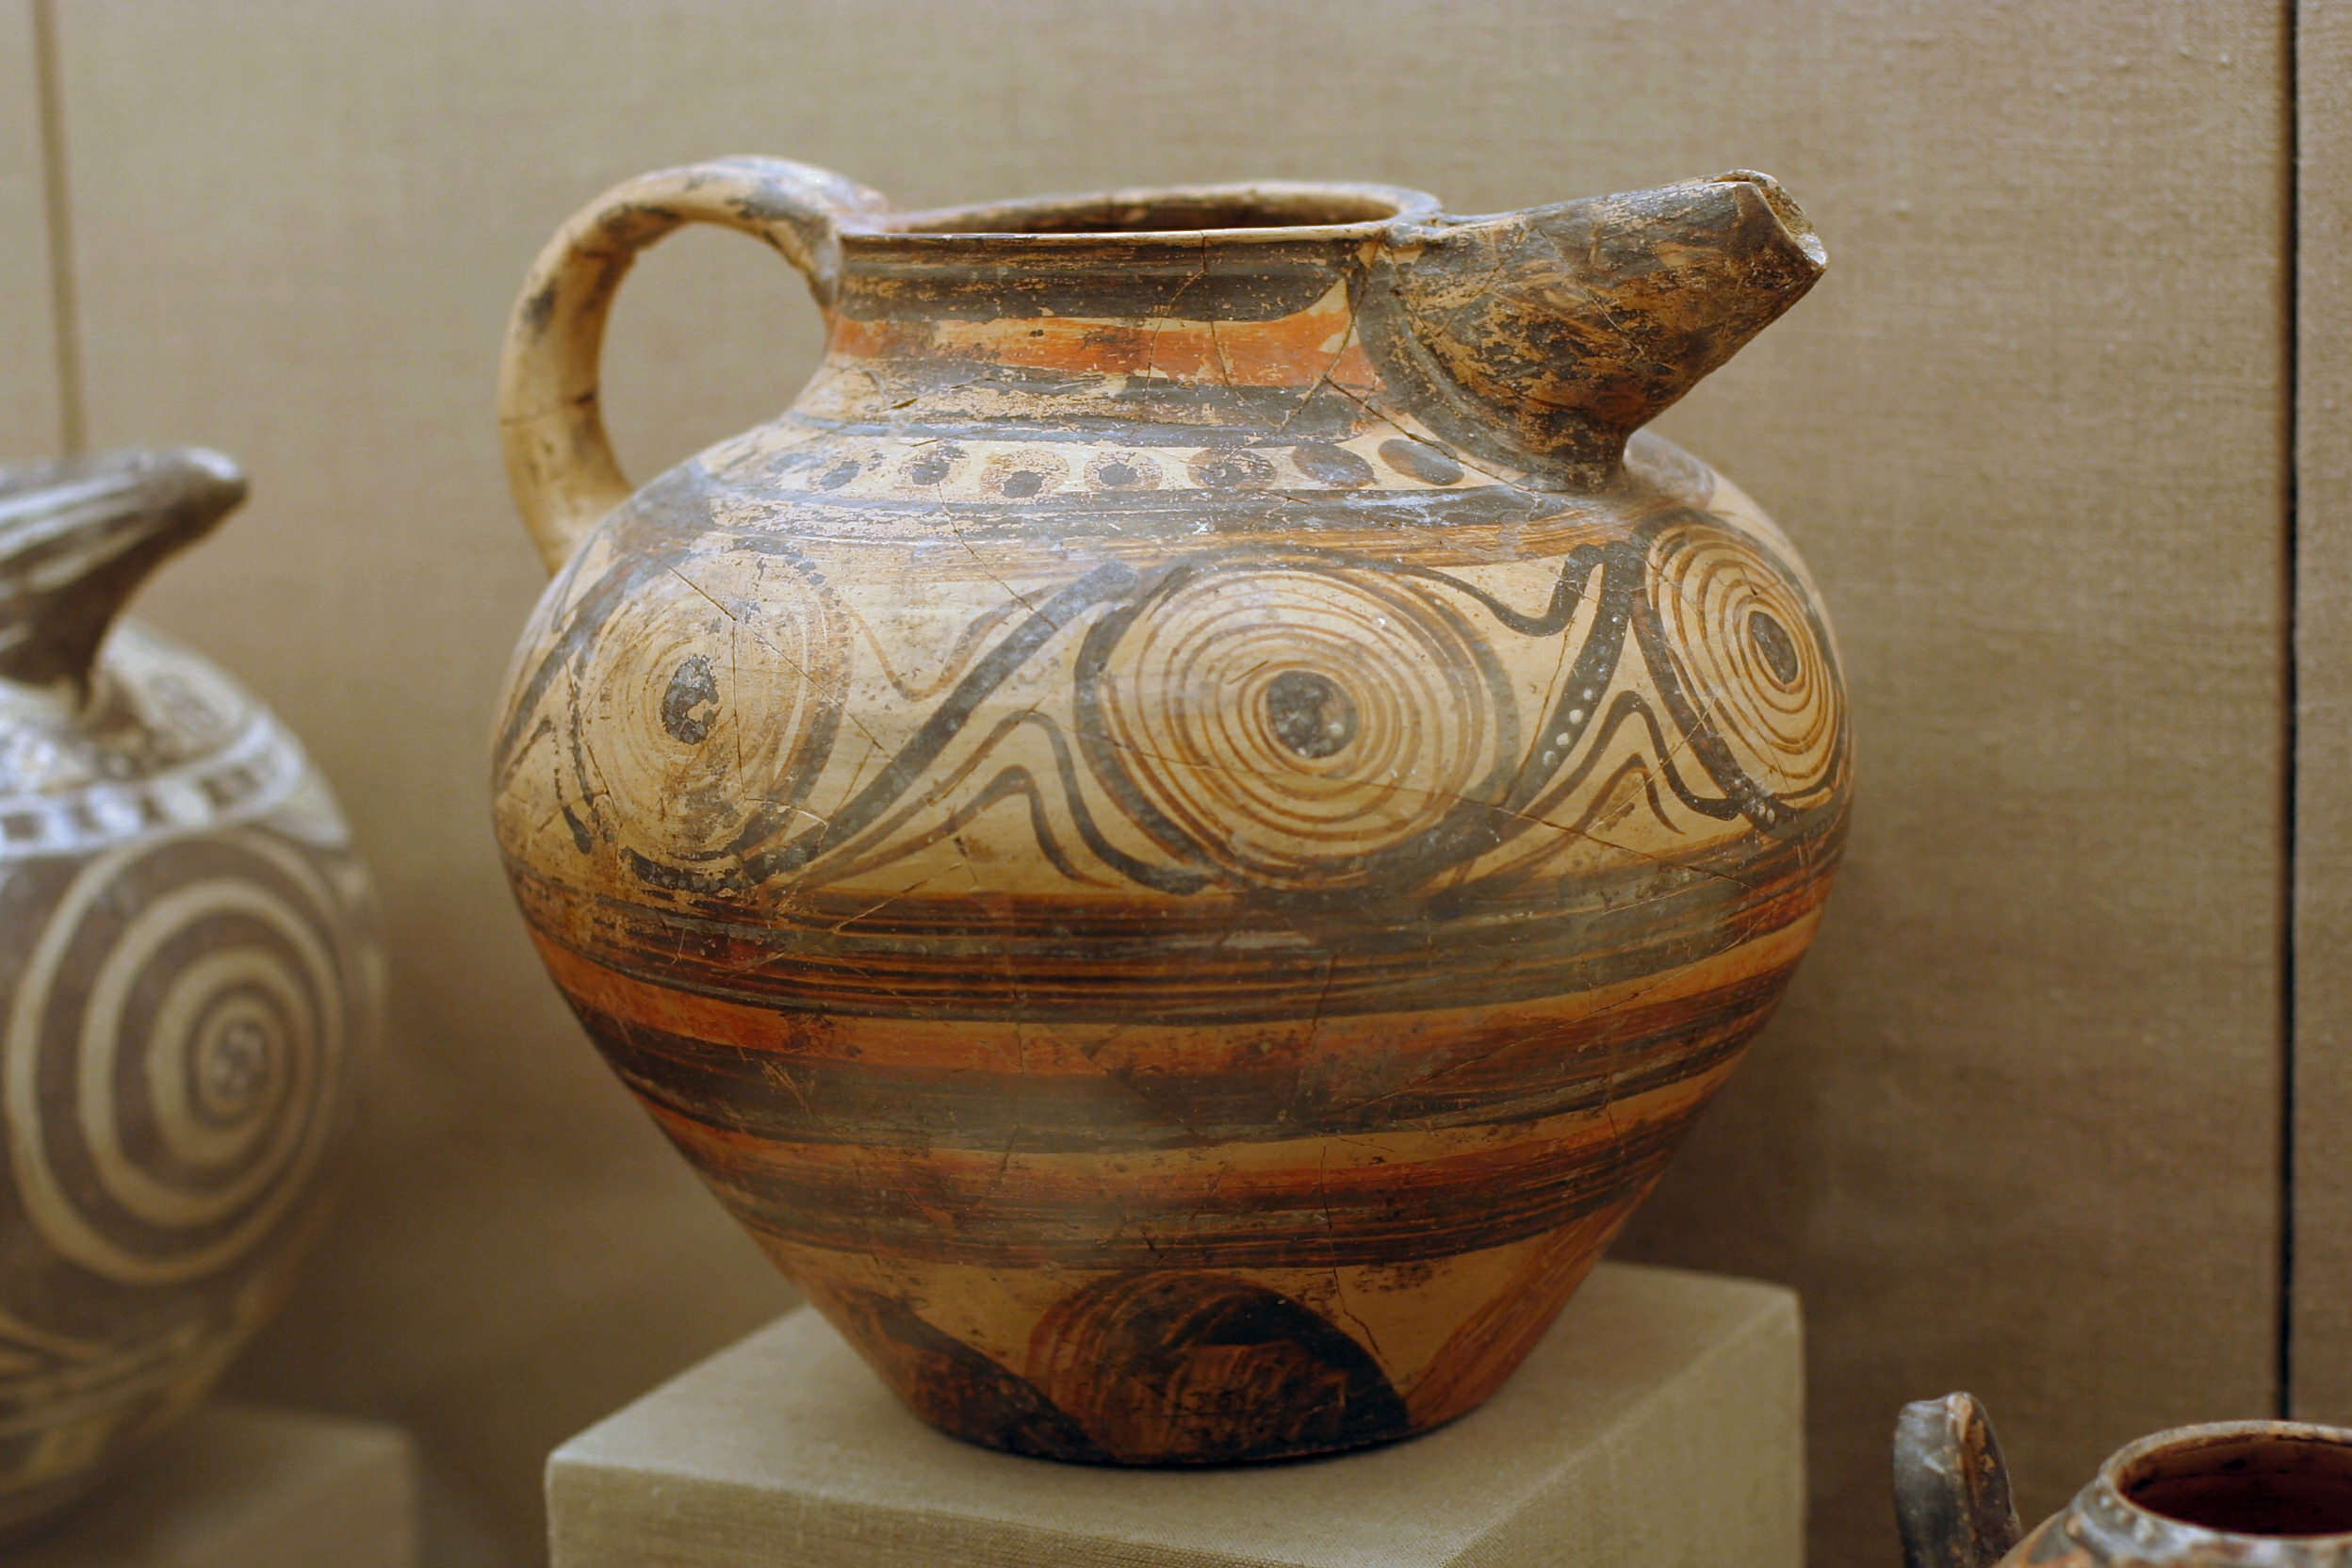 1700 1600 1200. Minoan Pottery.